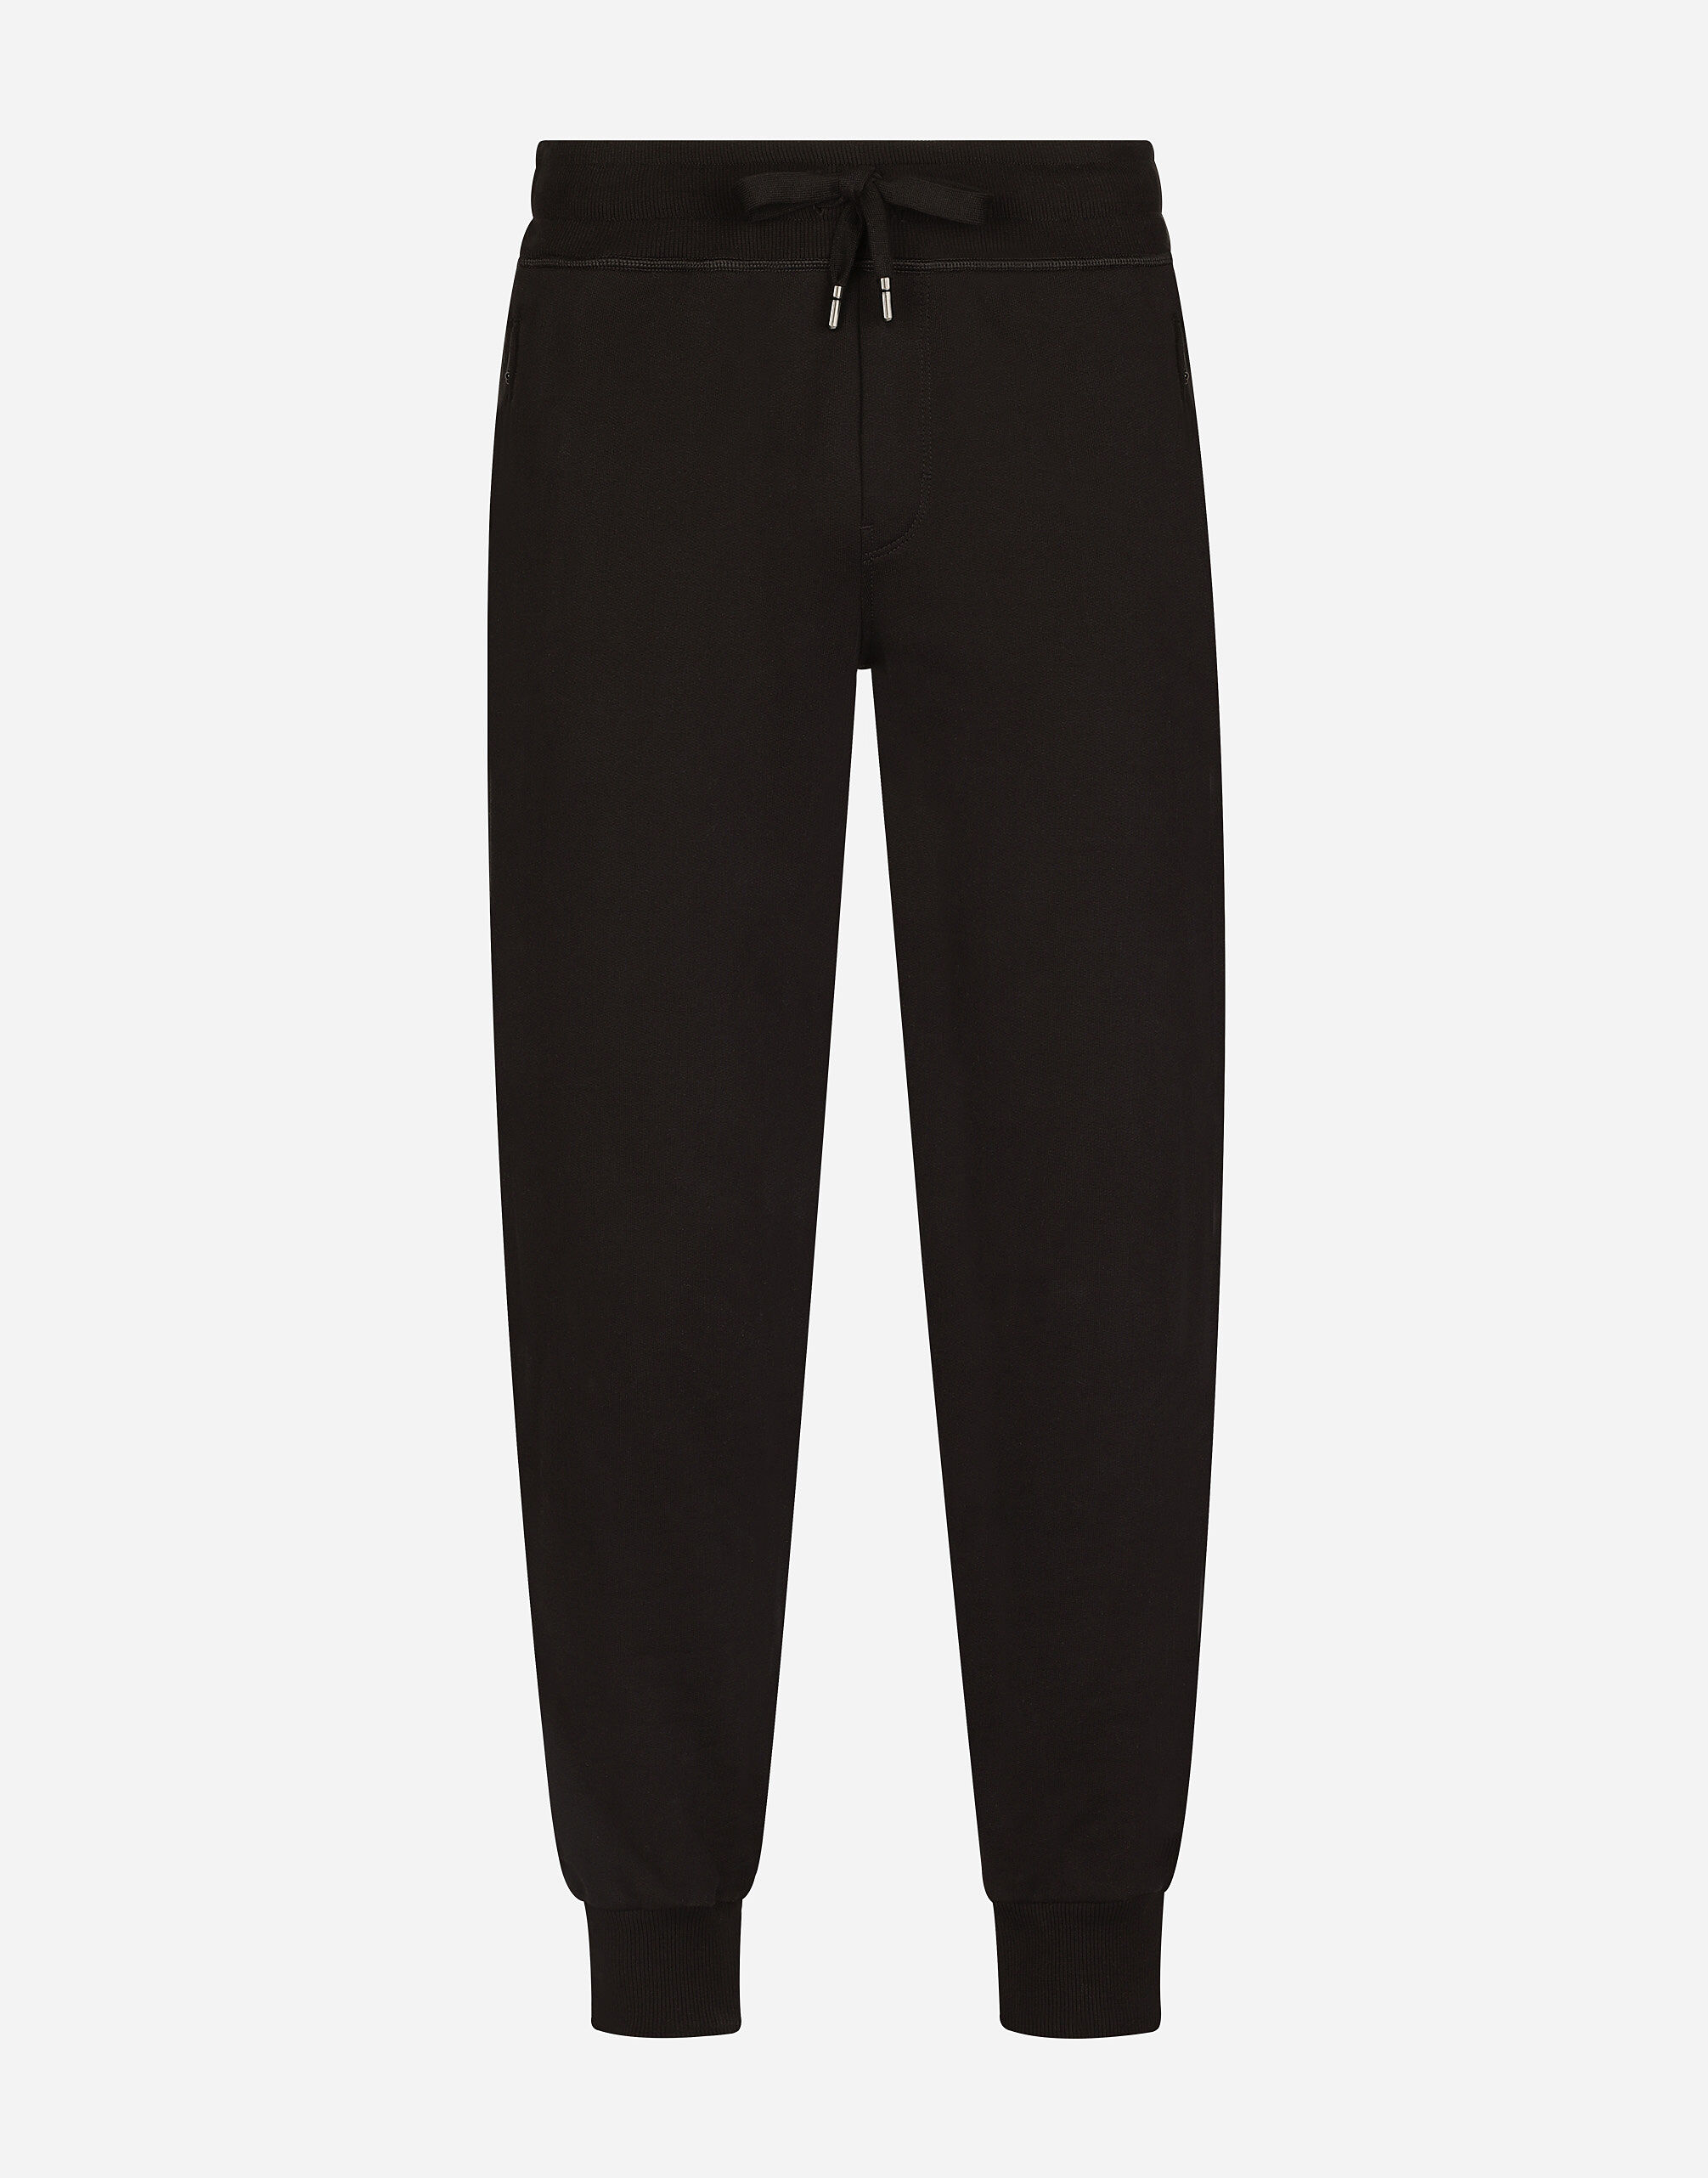 Dolce & Gabbana Jersey jogging pants with branded tag Black GVF7AZHU7H9